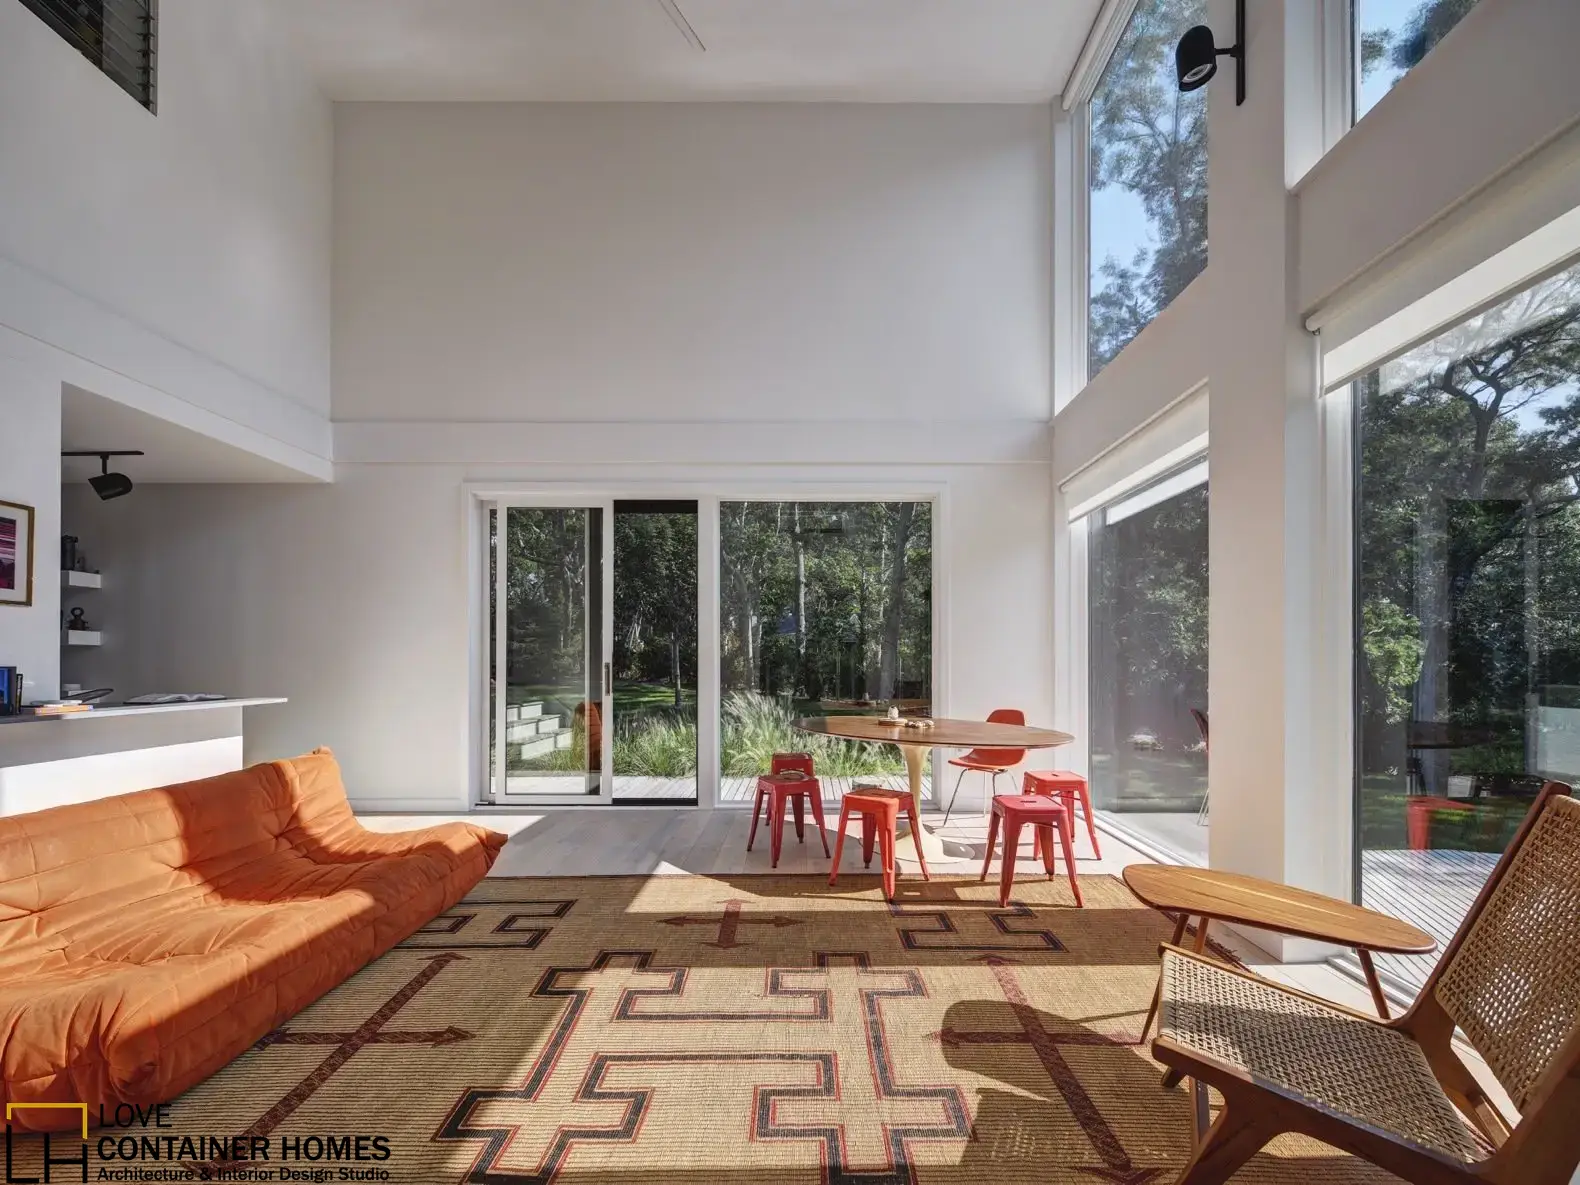 Interior: Beautiful and comfy furniture create luxury modern feel.